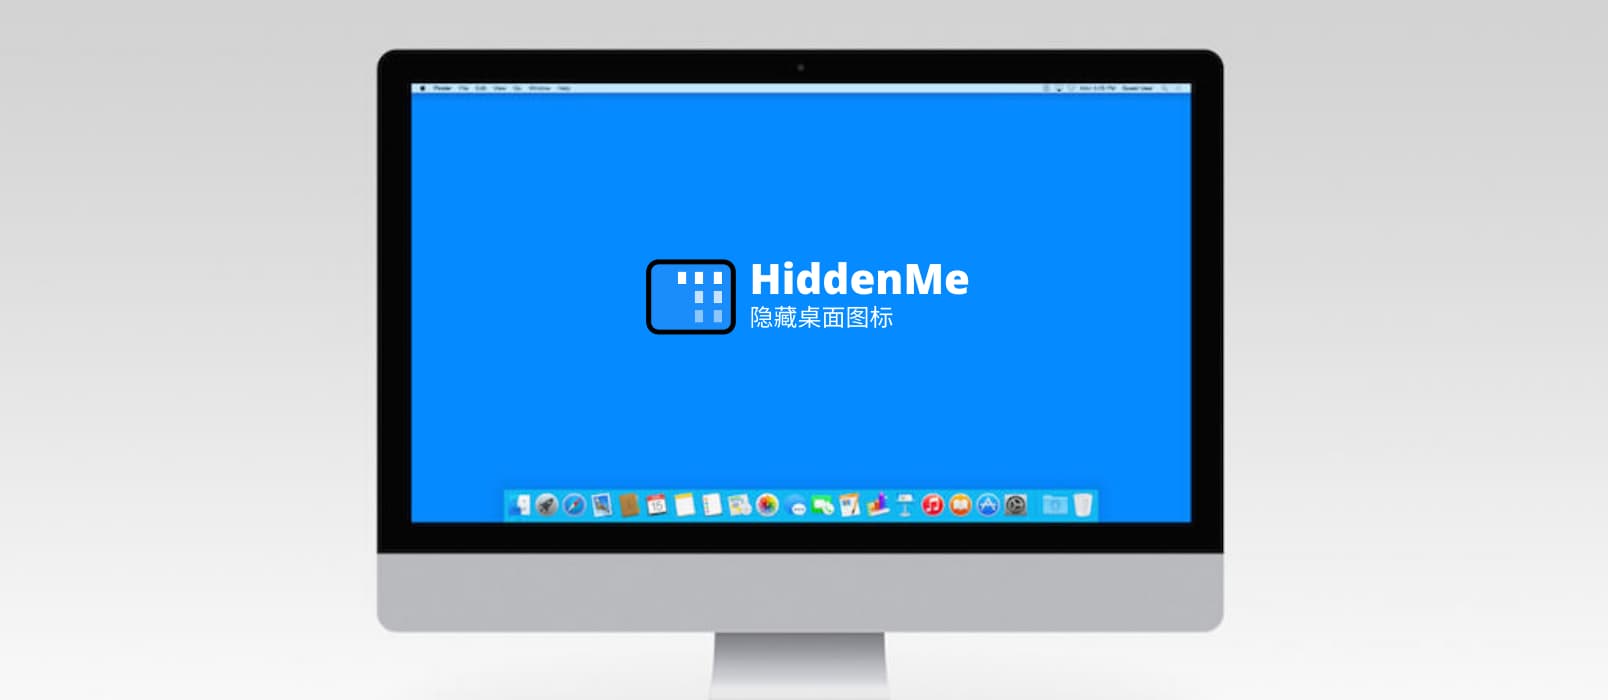 HiddenMe - 快速隐藏 macOS 桌面所有图标、文件 1